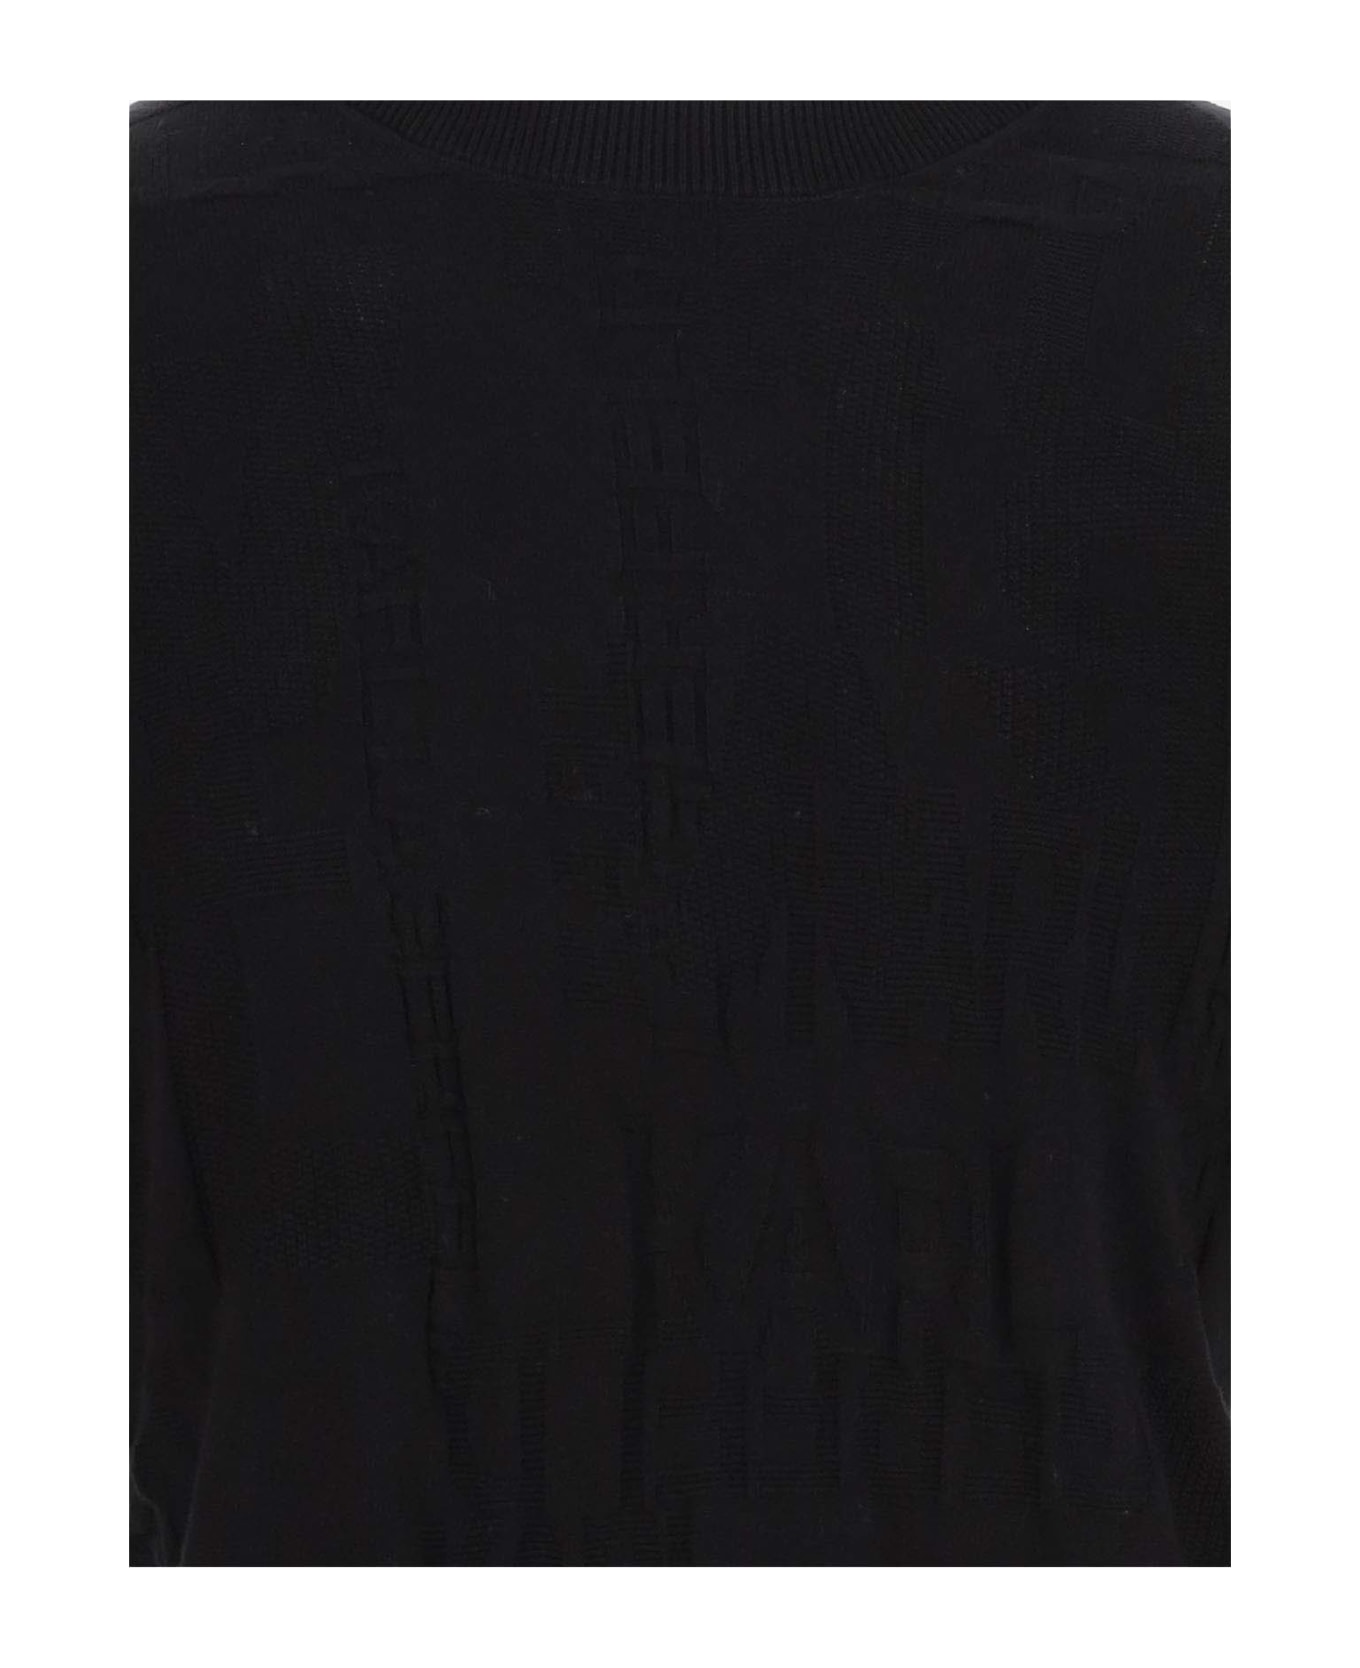 Karl Lagerfeld Cotton Sweatshirt With All-over Logo - Black